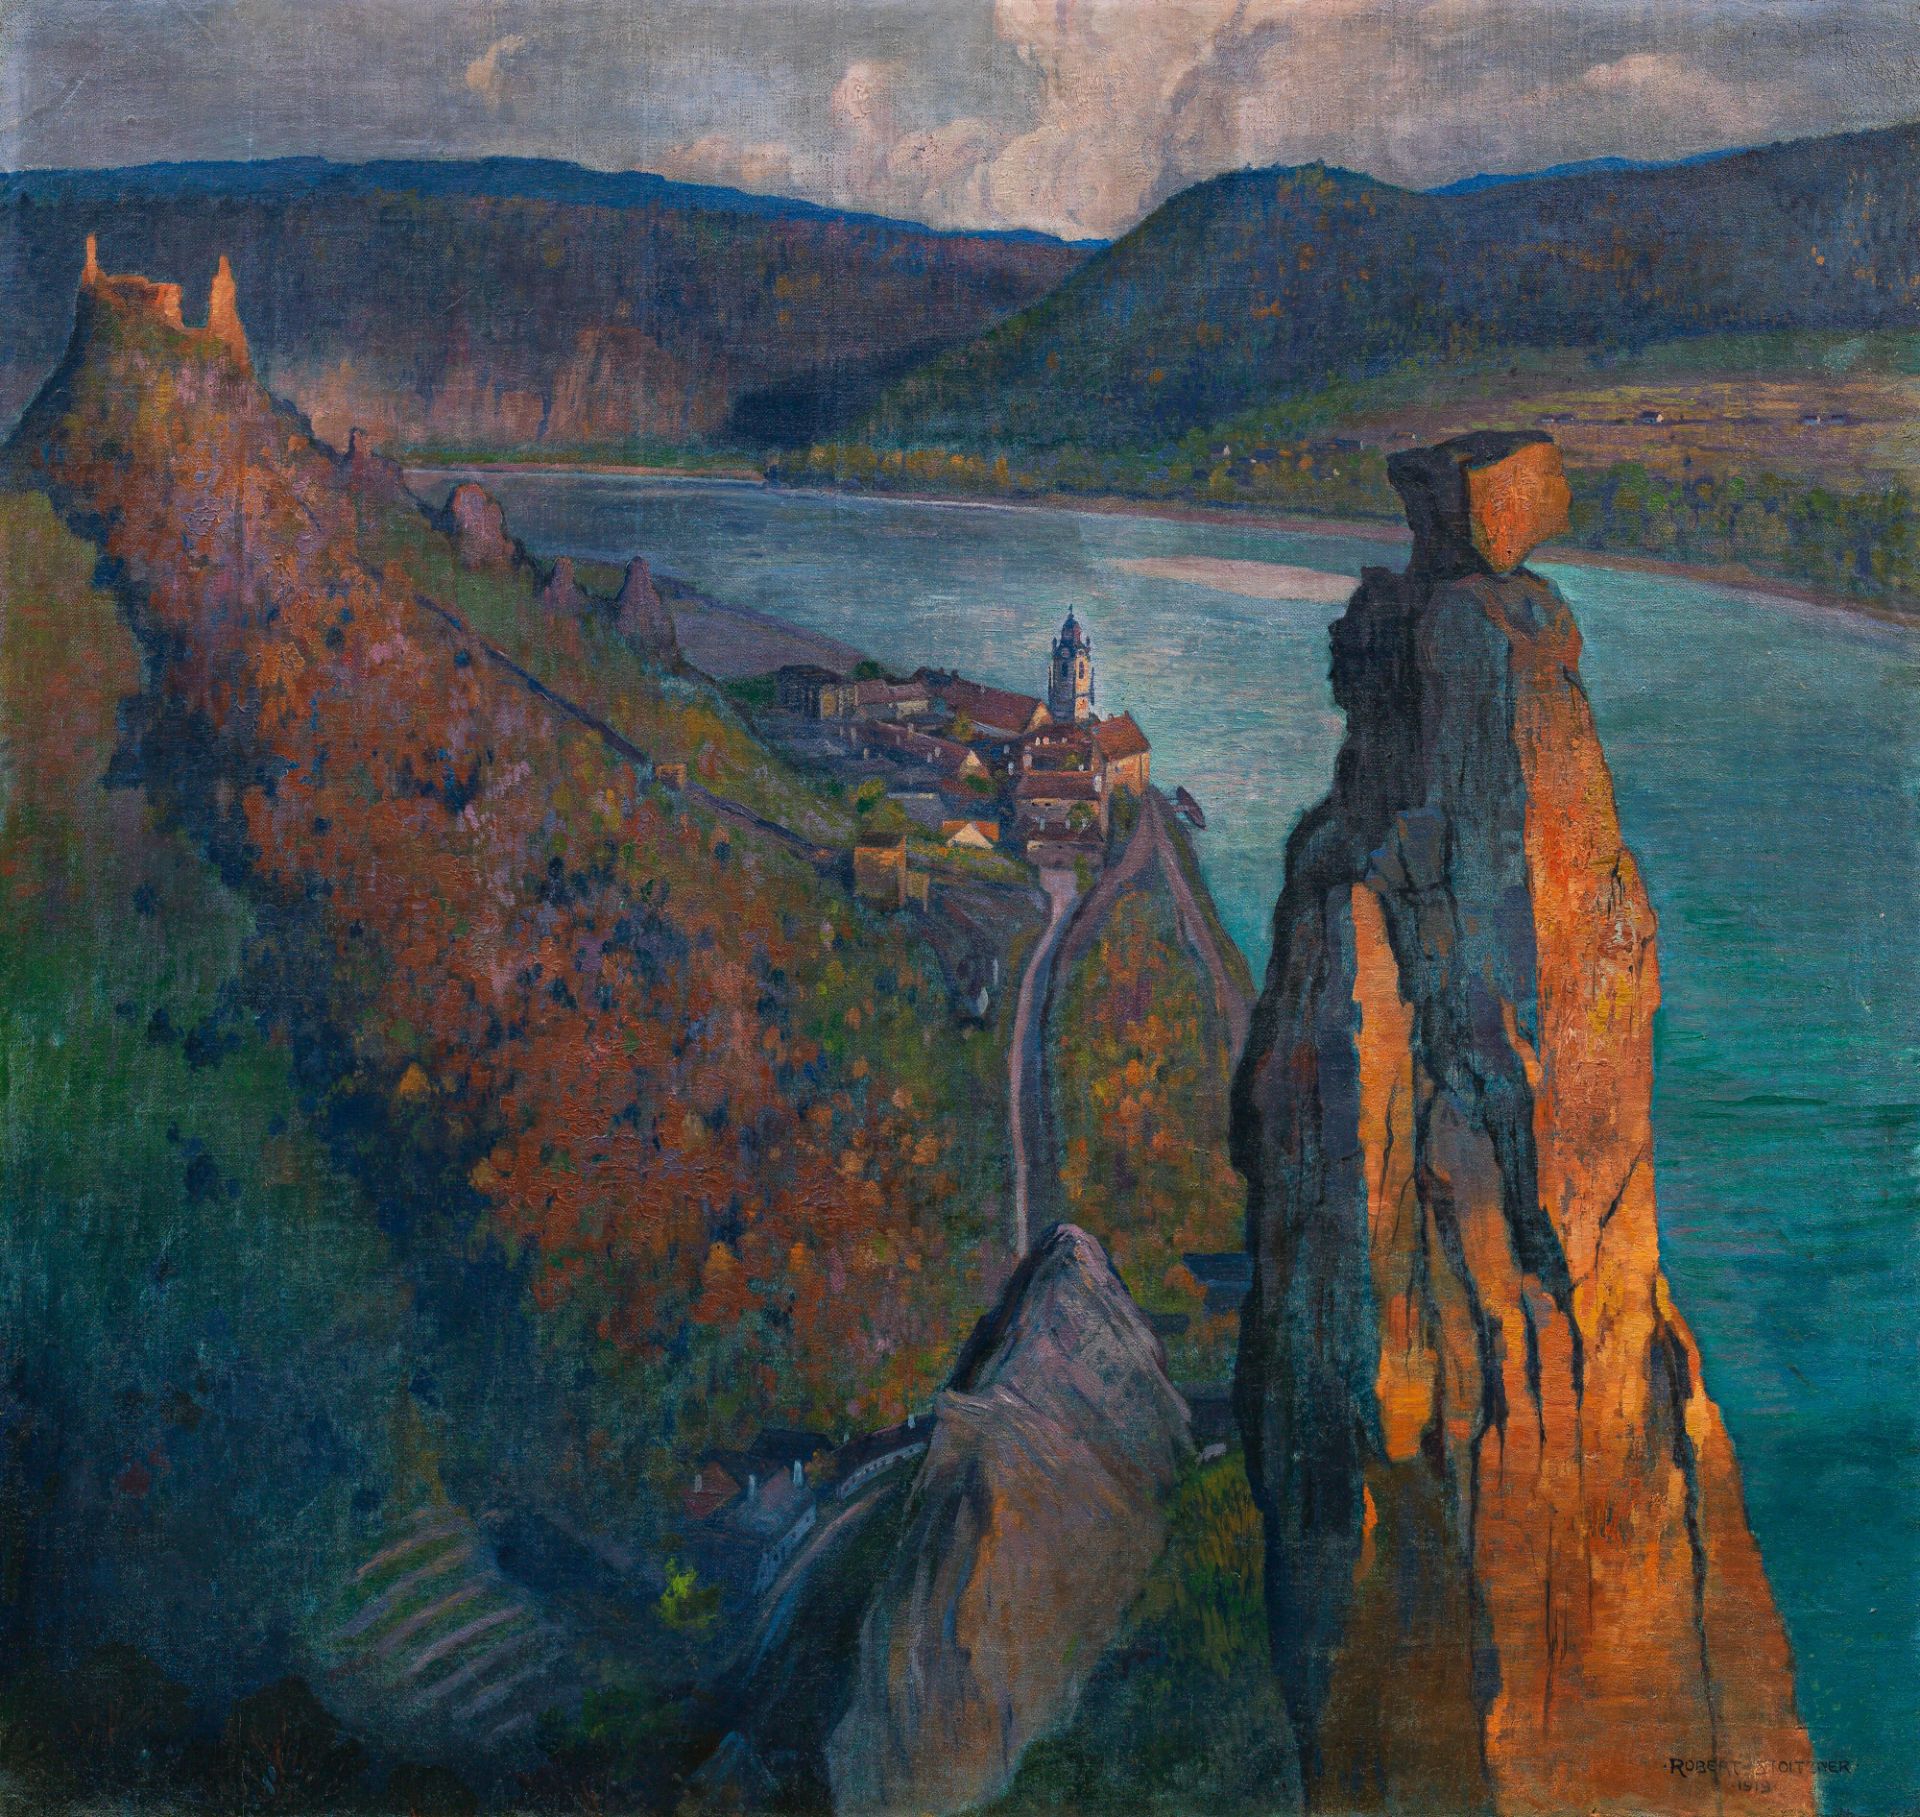 Robert StoitznerThe Wächter at Dürnstein1919oil on canvas; framed96 x 102 cmsigned and dated on